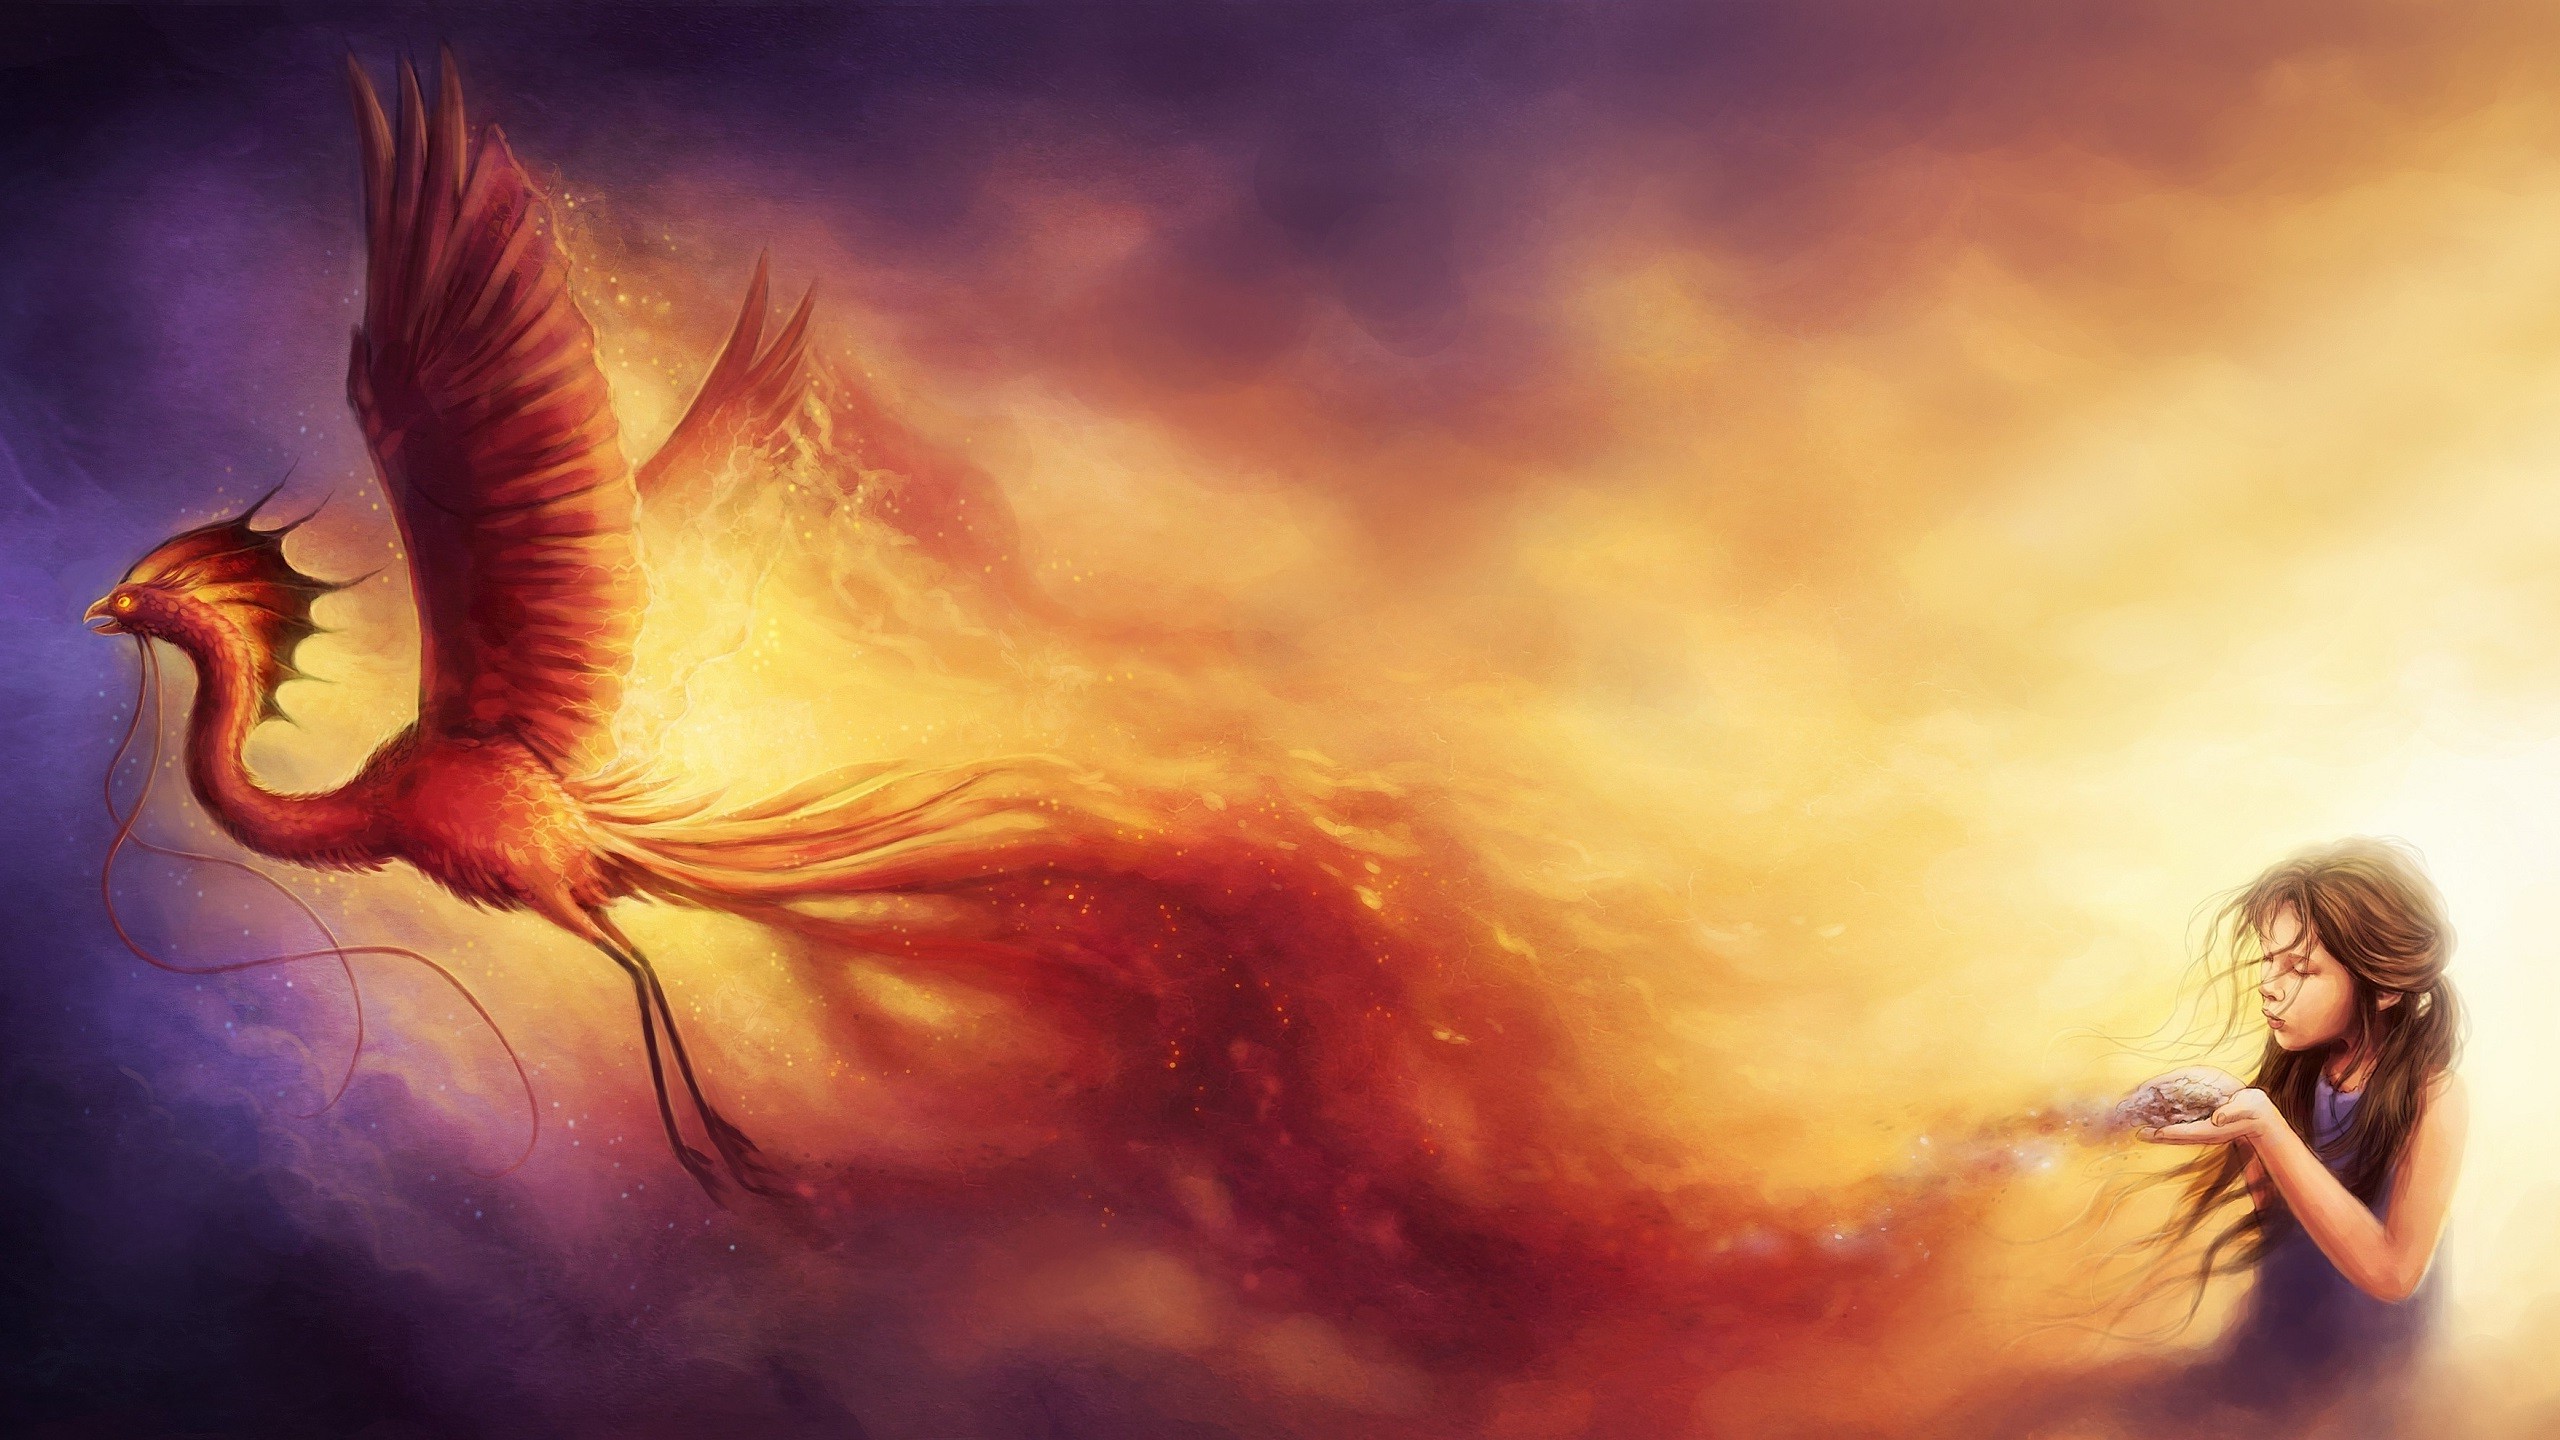 Fantasy Phoenix Digital Art Wallpapers